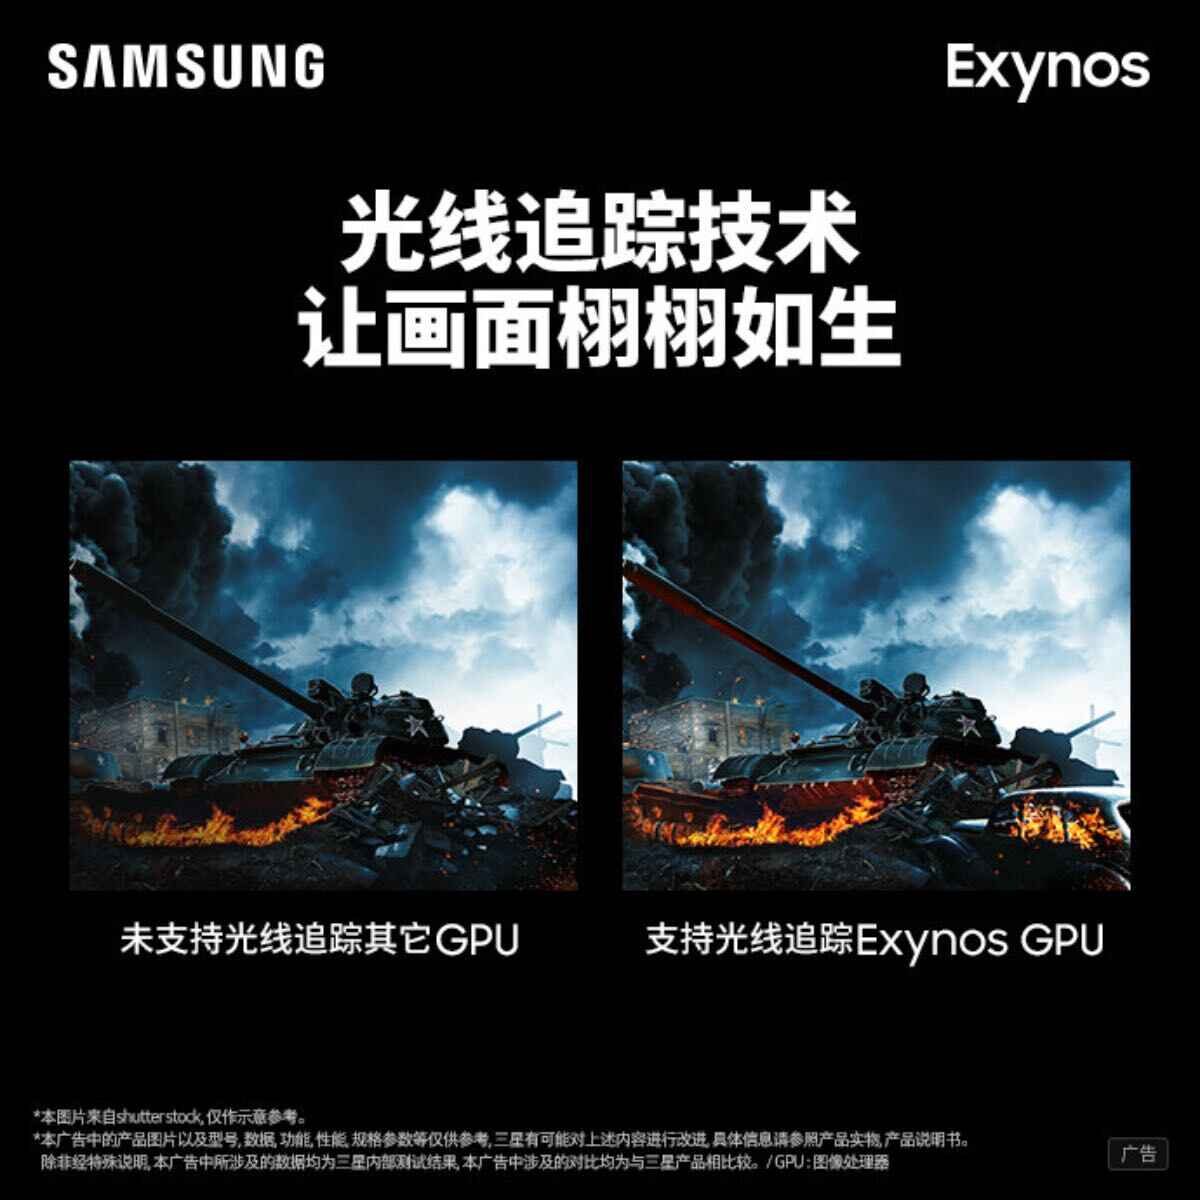 samsung ray tracing smartphone gpu exynos amd 2